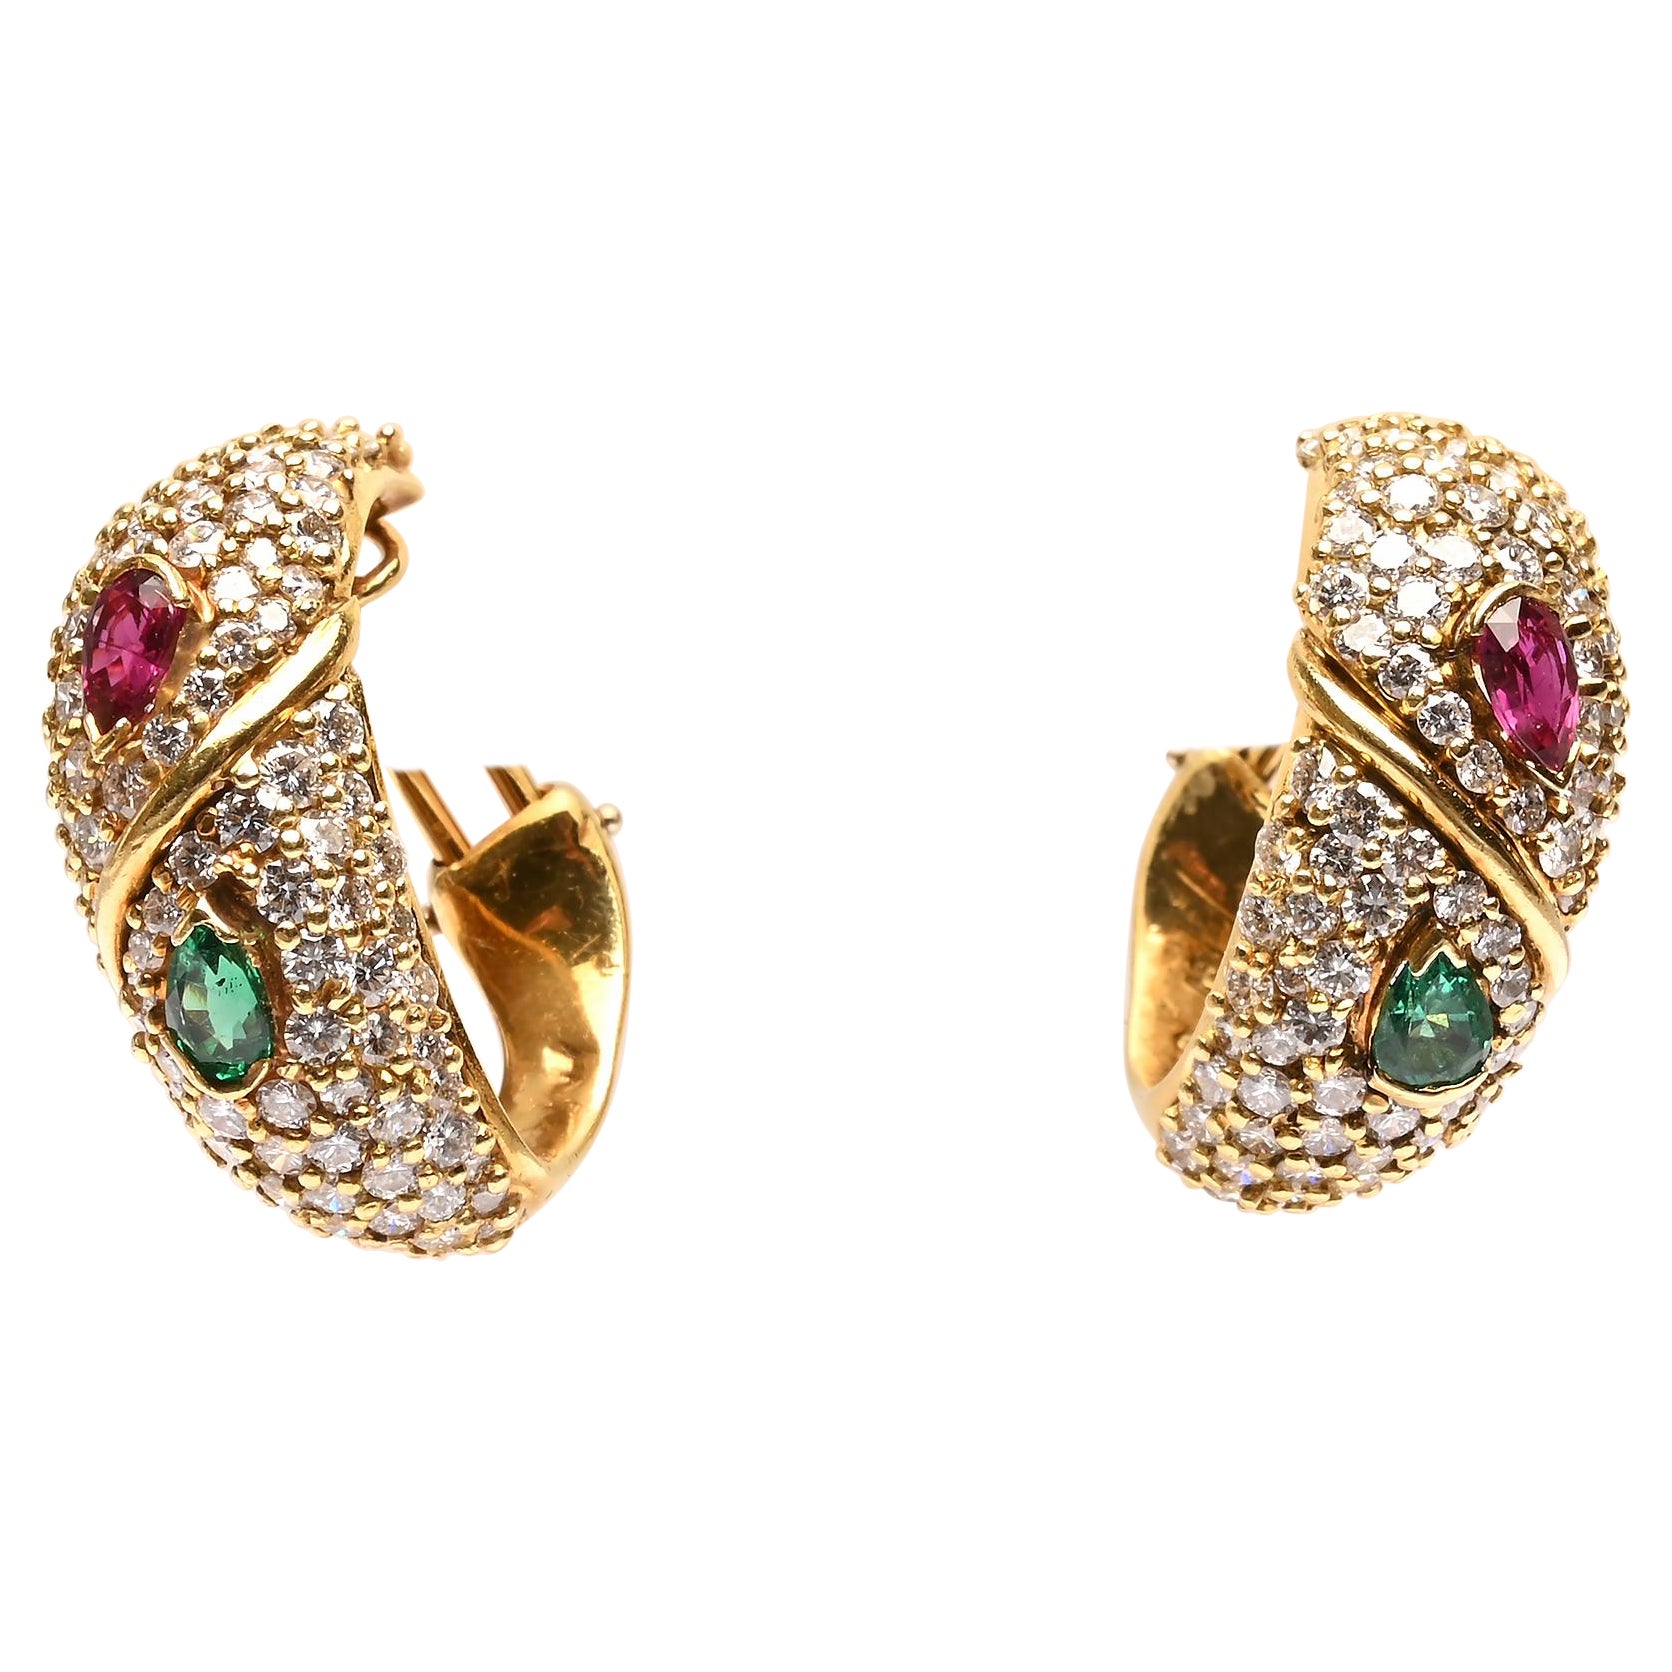 Hammerman Brothers Diamond Hoop Earrings with Rubies and Emeralds For Sale